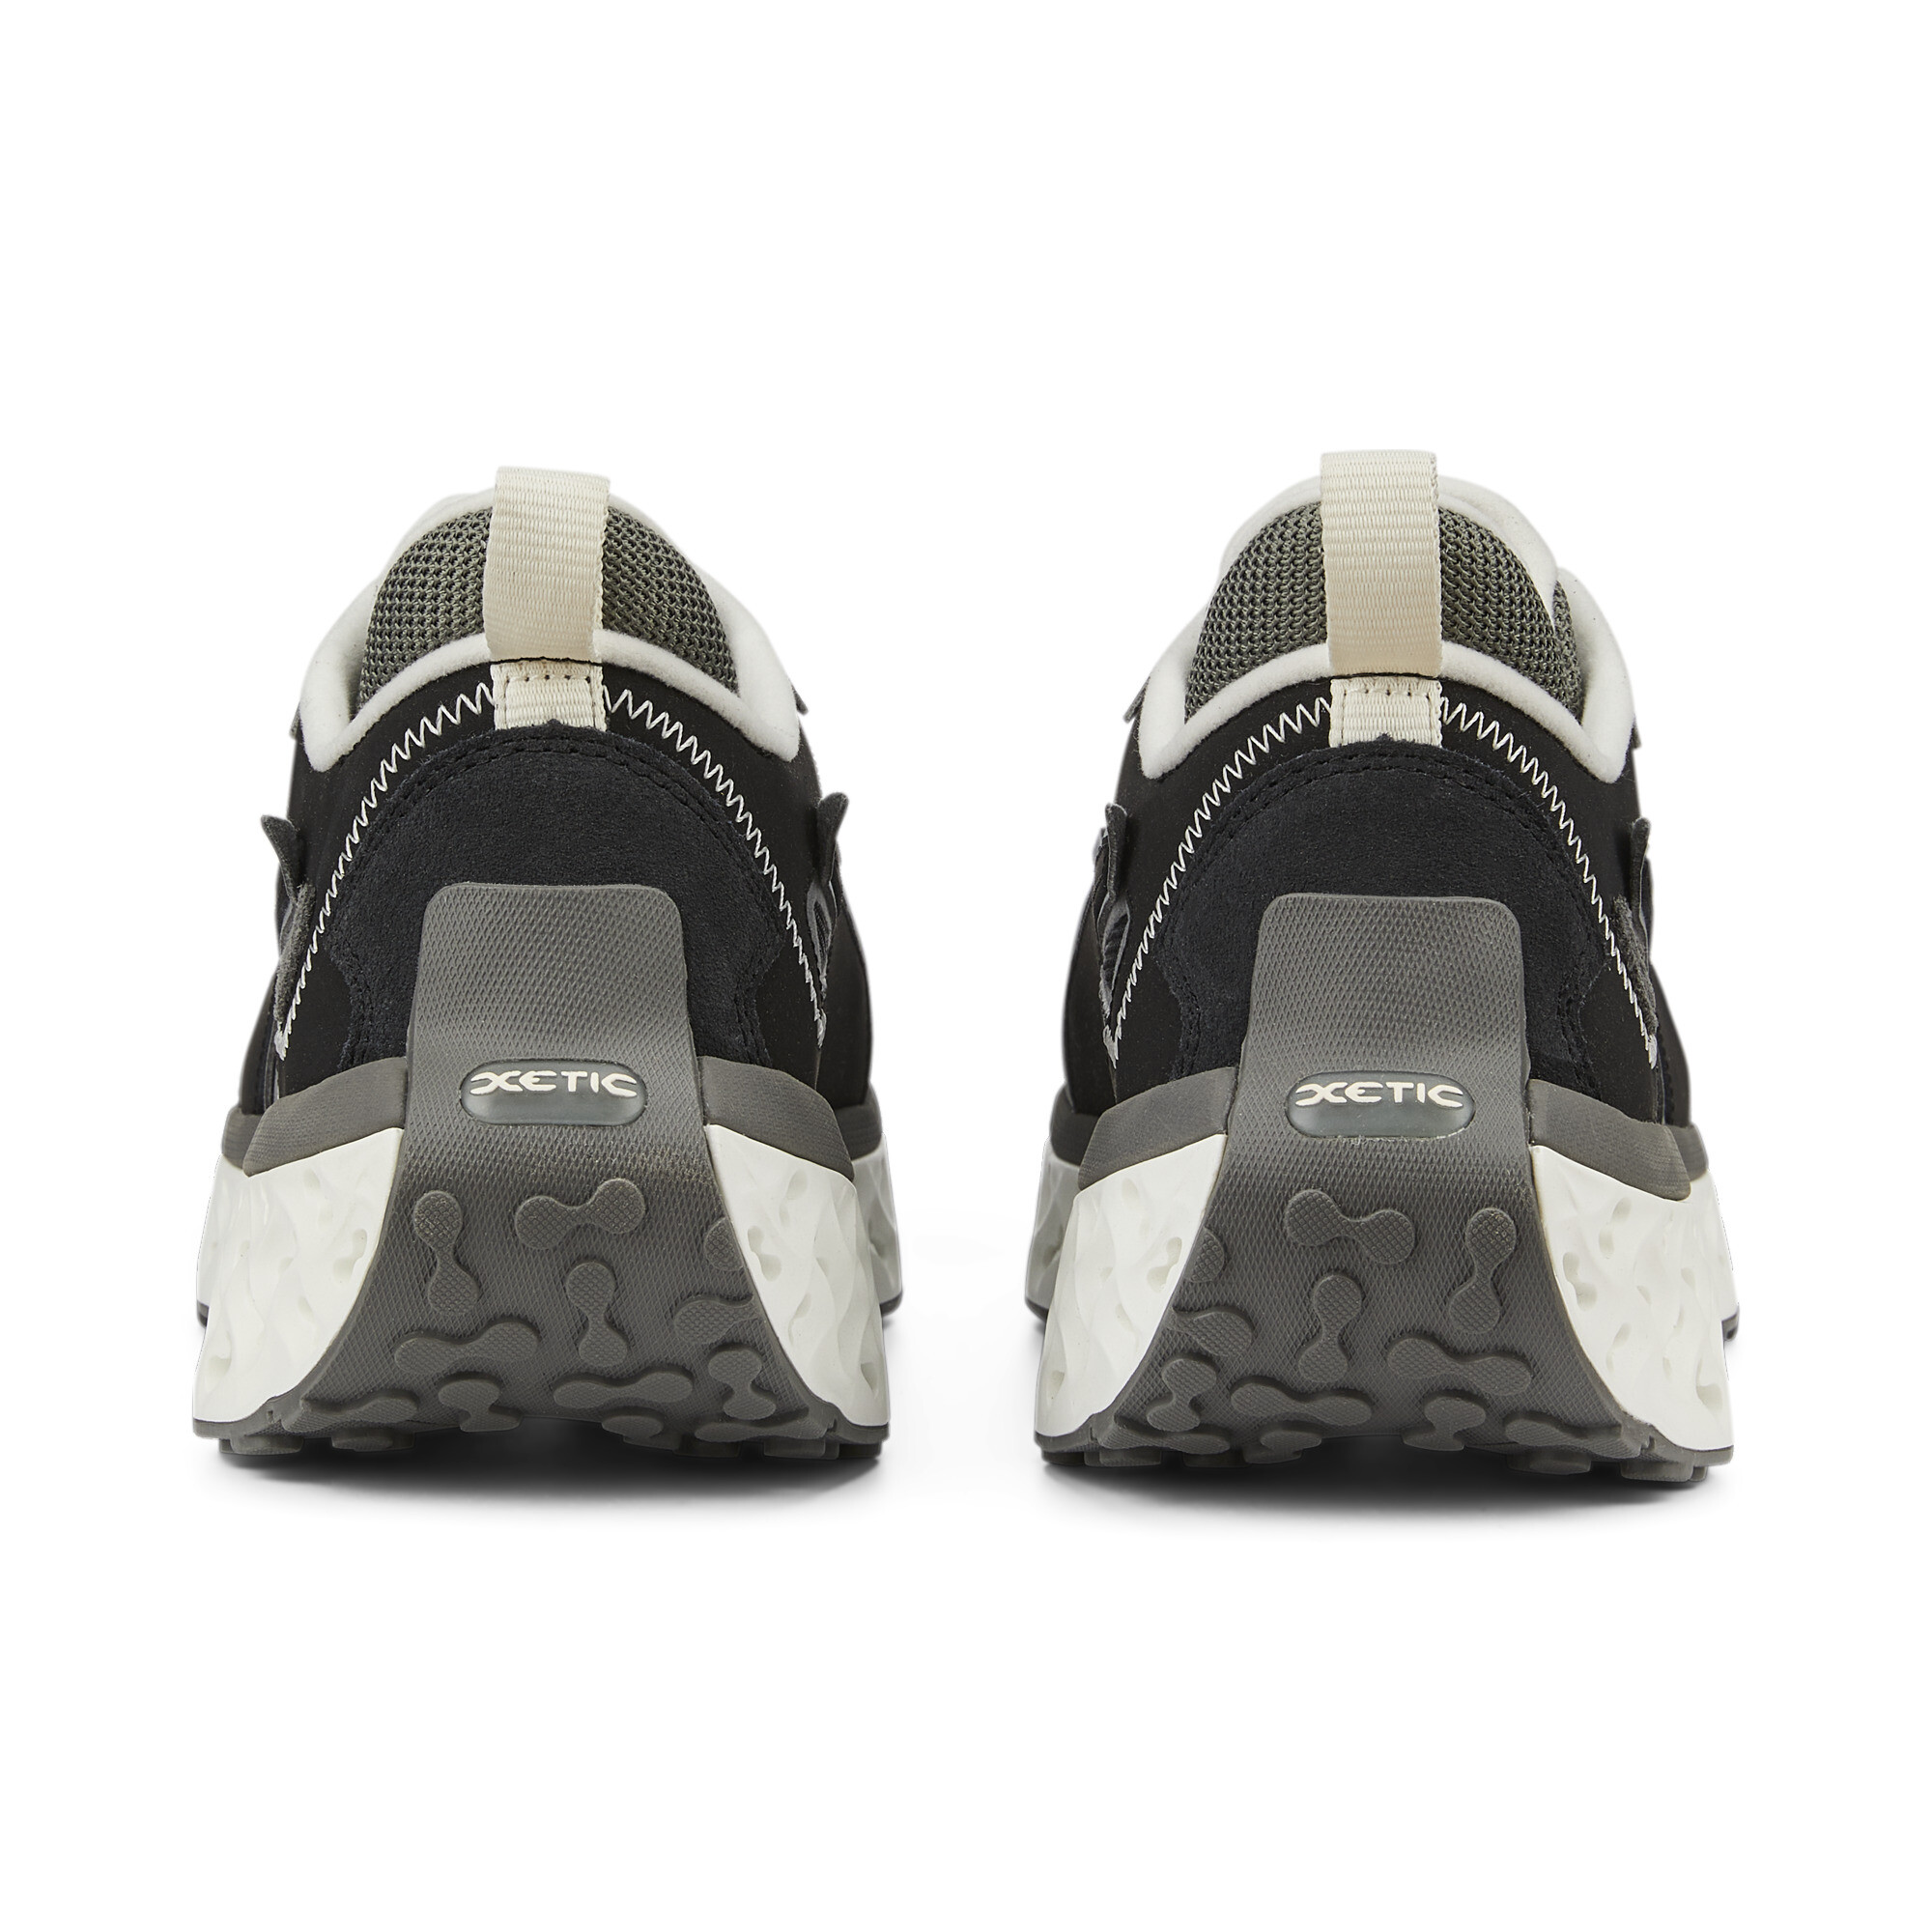 Men's PUMA XETIC Sculpt Premium Sneakers In Black, Size EU 42